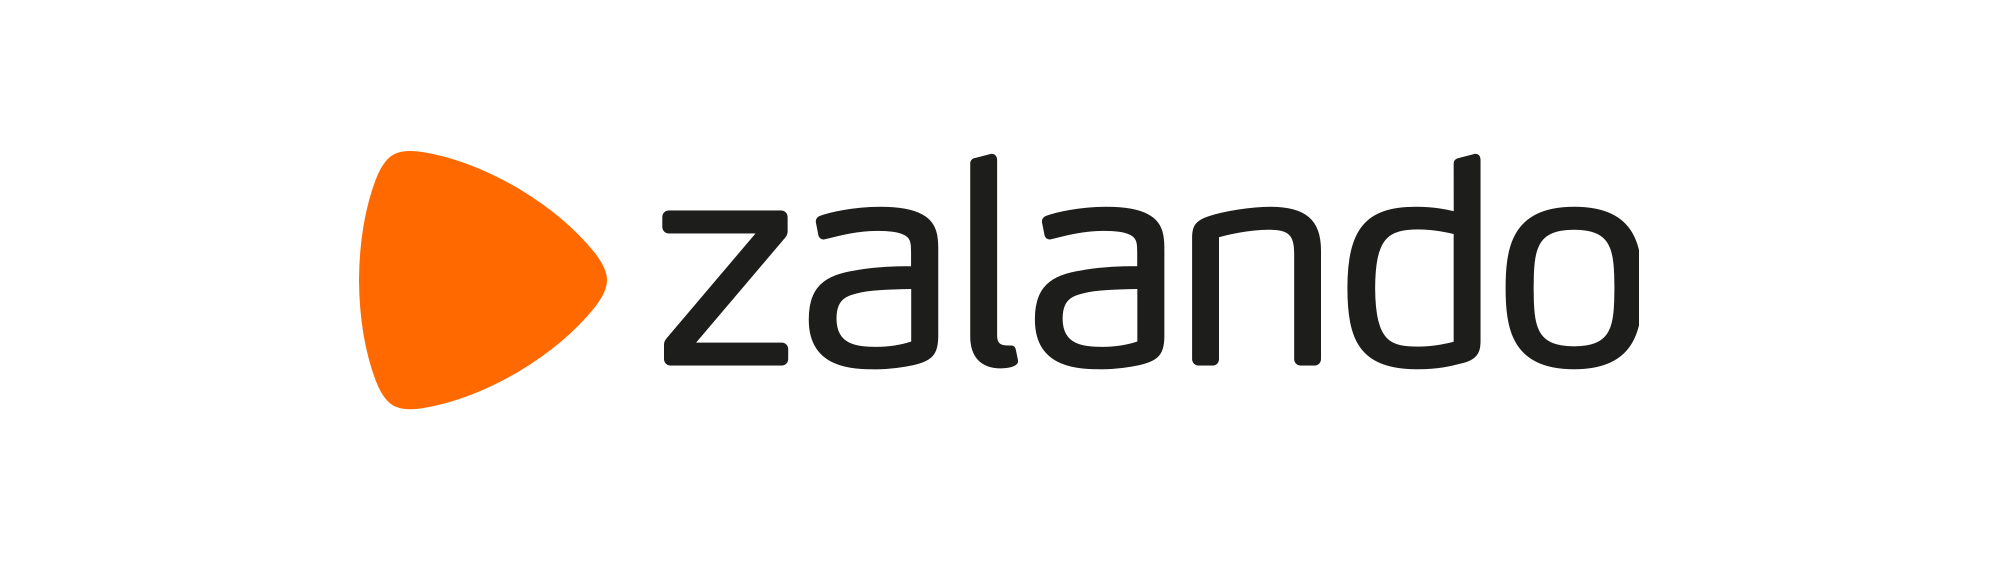 Zalando Logo - Zalando-Logo - Working Capital - Working Capital